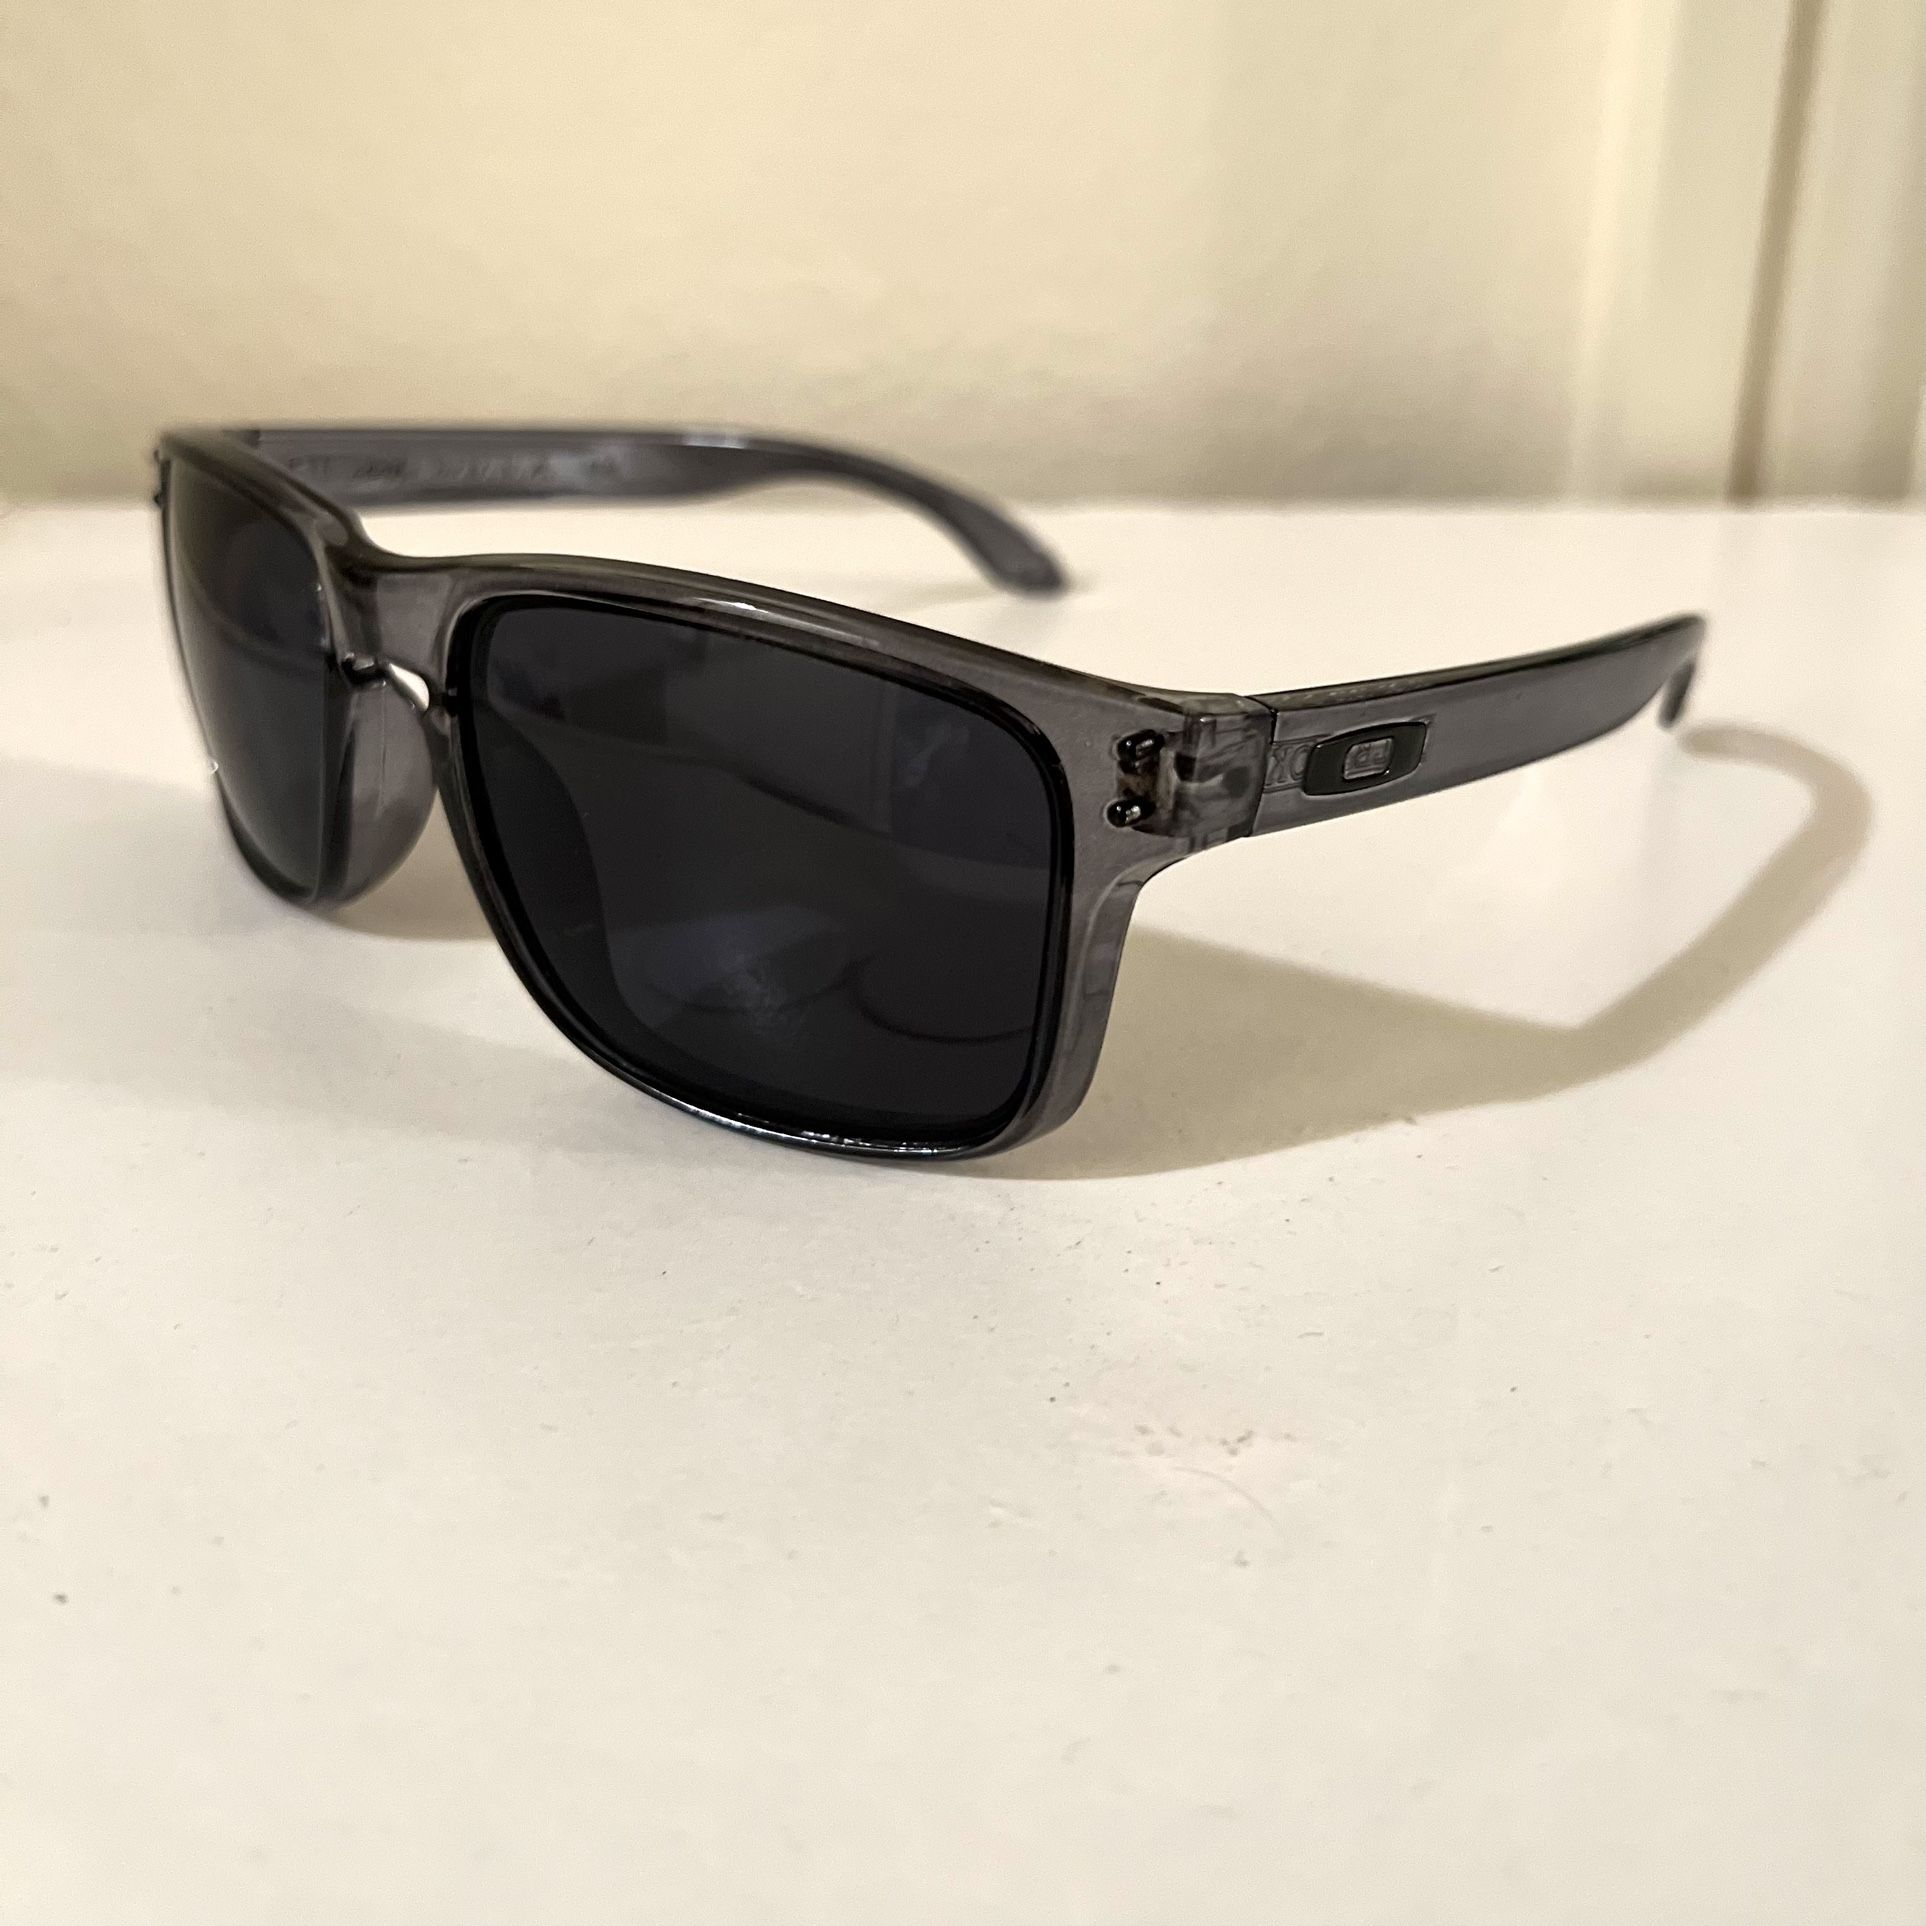 Oakley Holbrook Sunglasses - No Damage - Pick Up Costa Mesa 